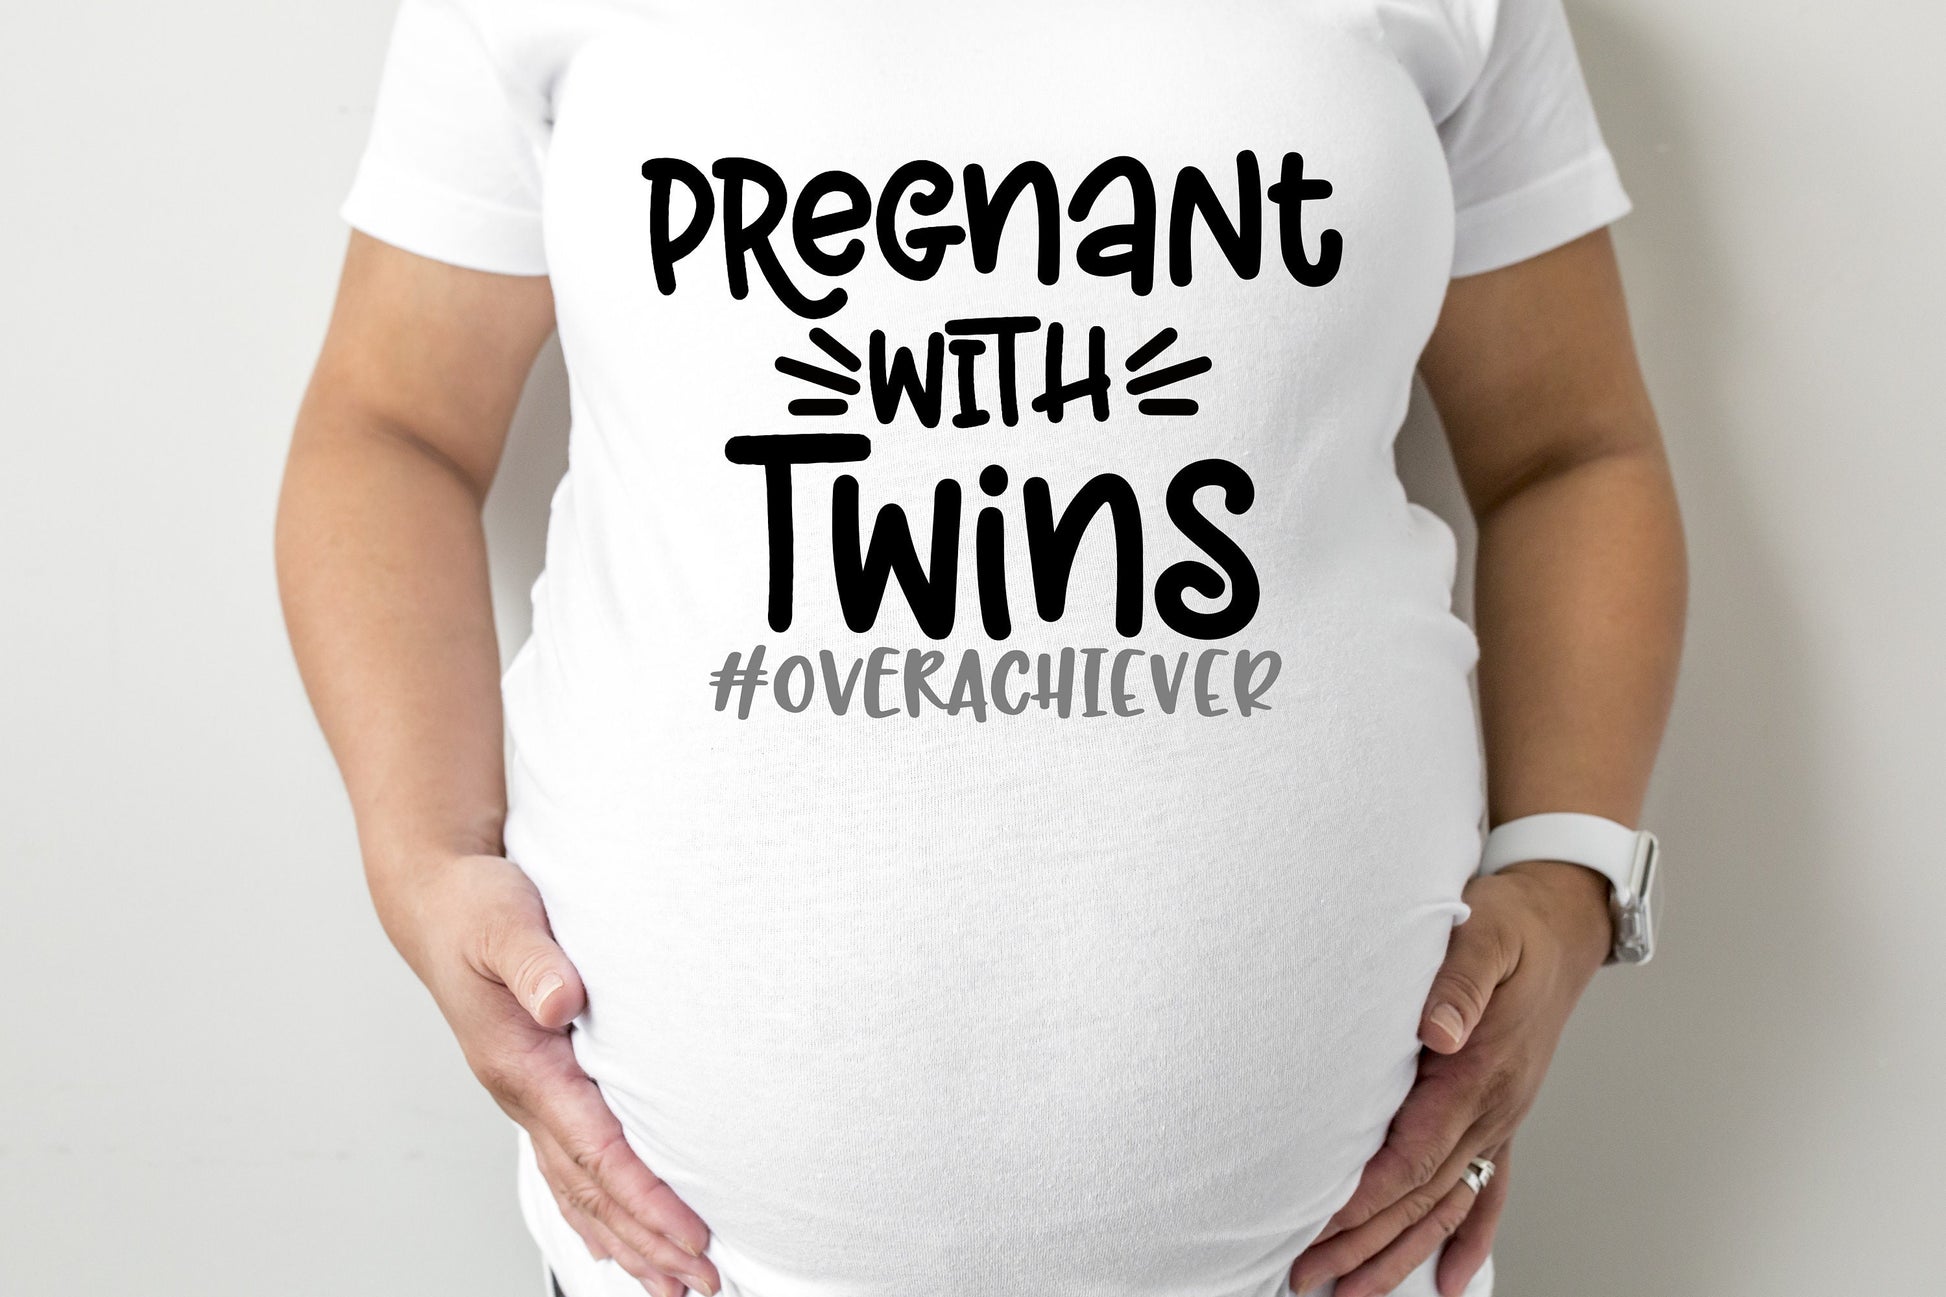 Maternity Shirt Pregnancy Shirt funny Maternity T Shirt 